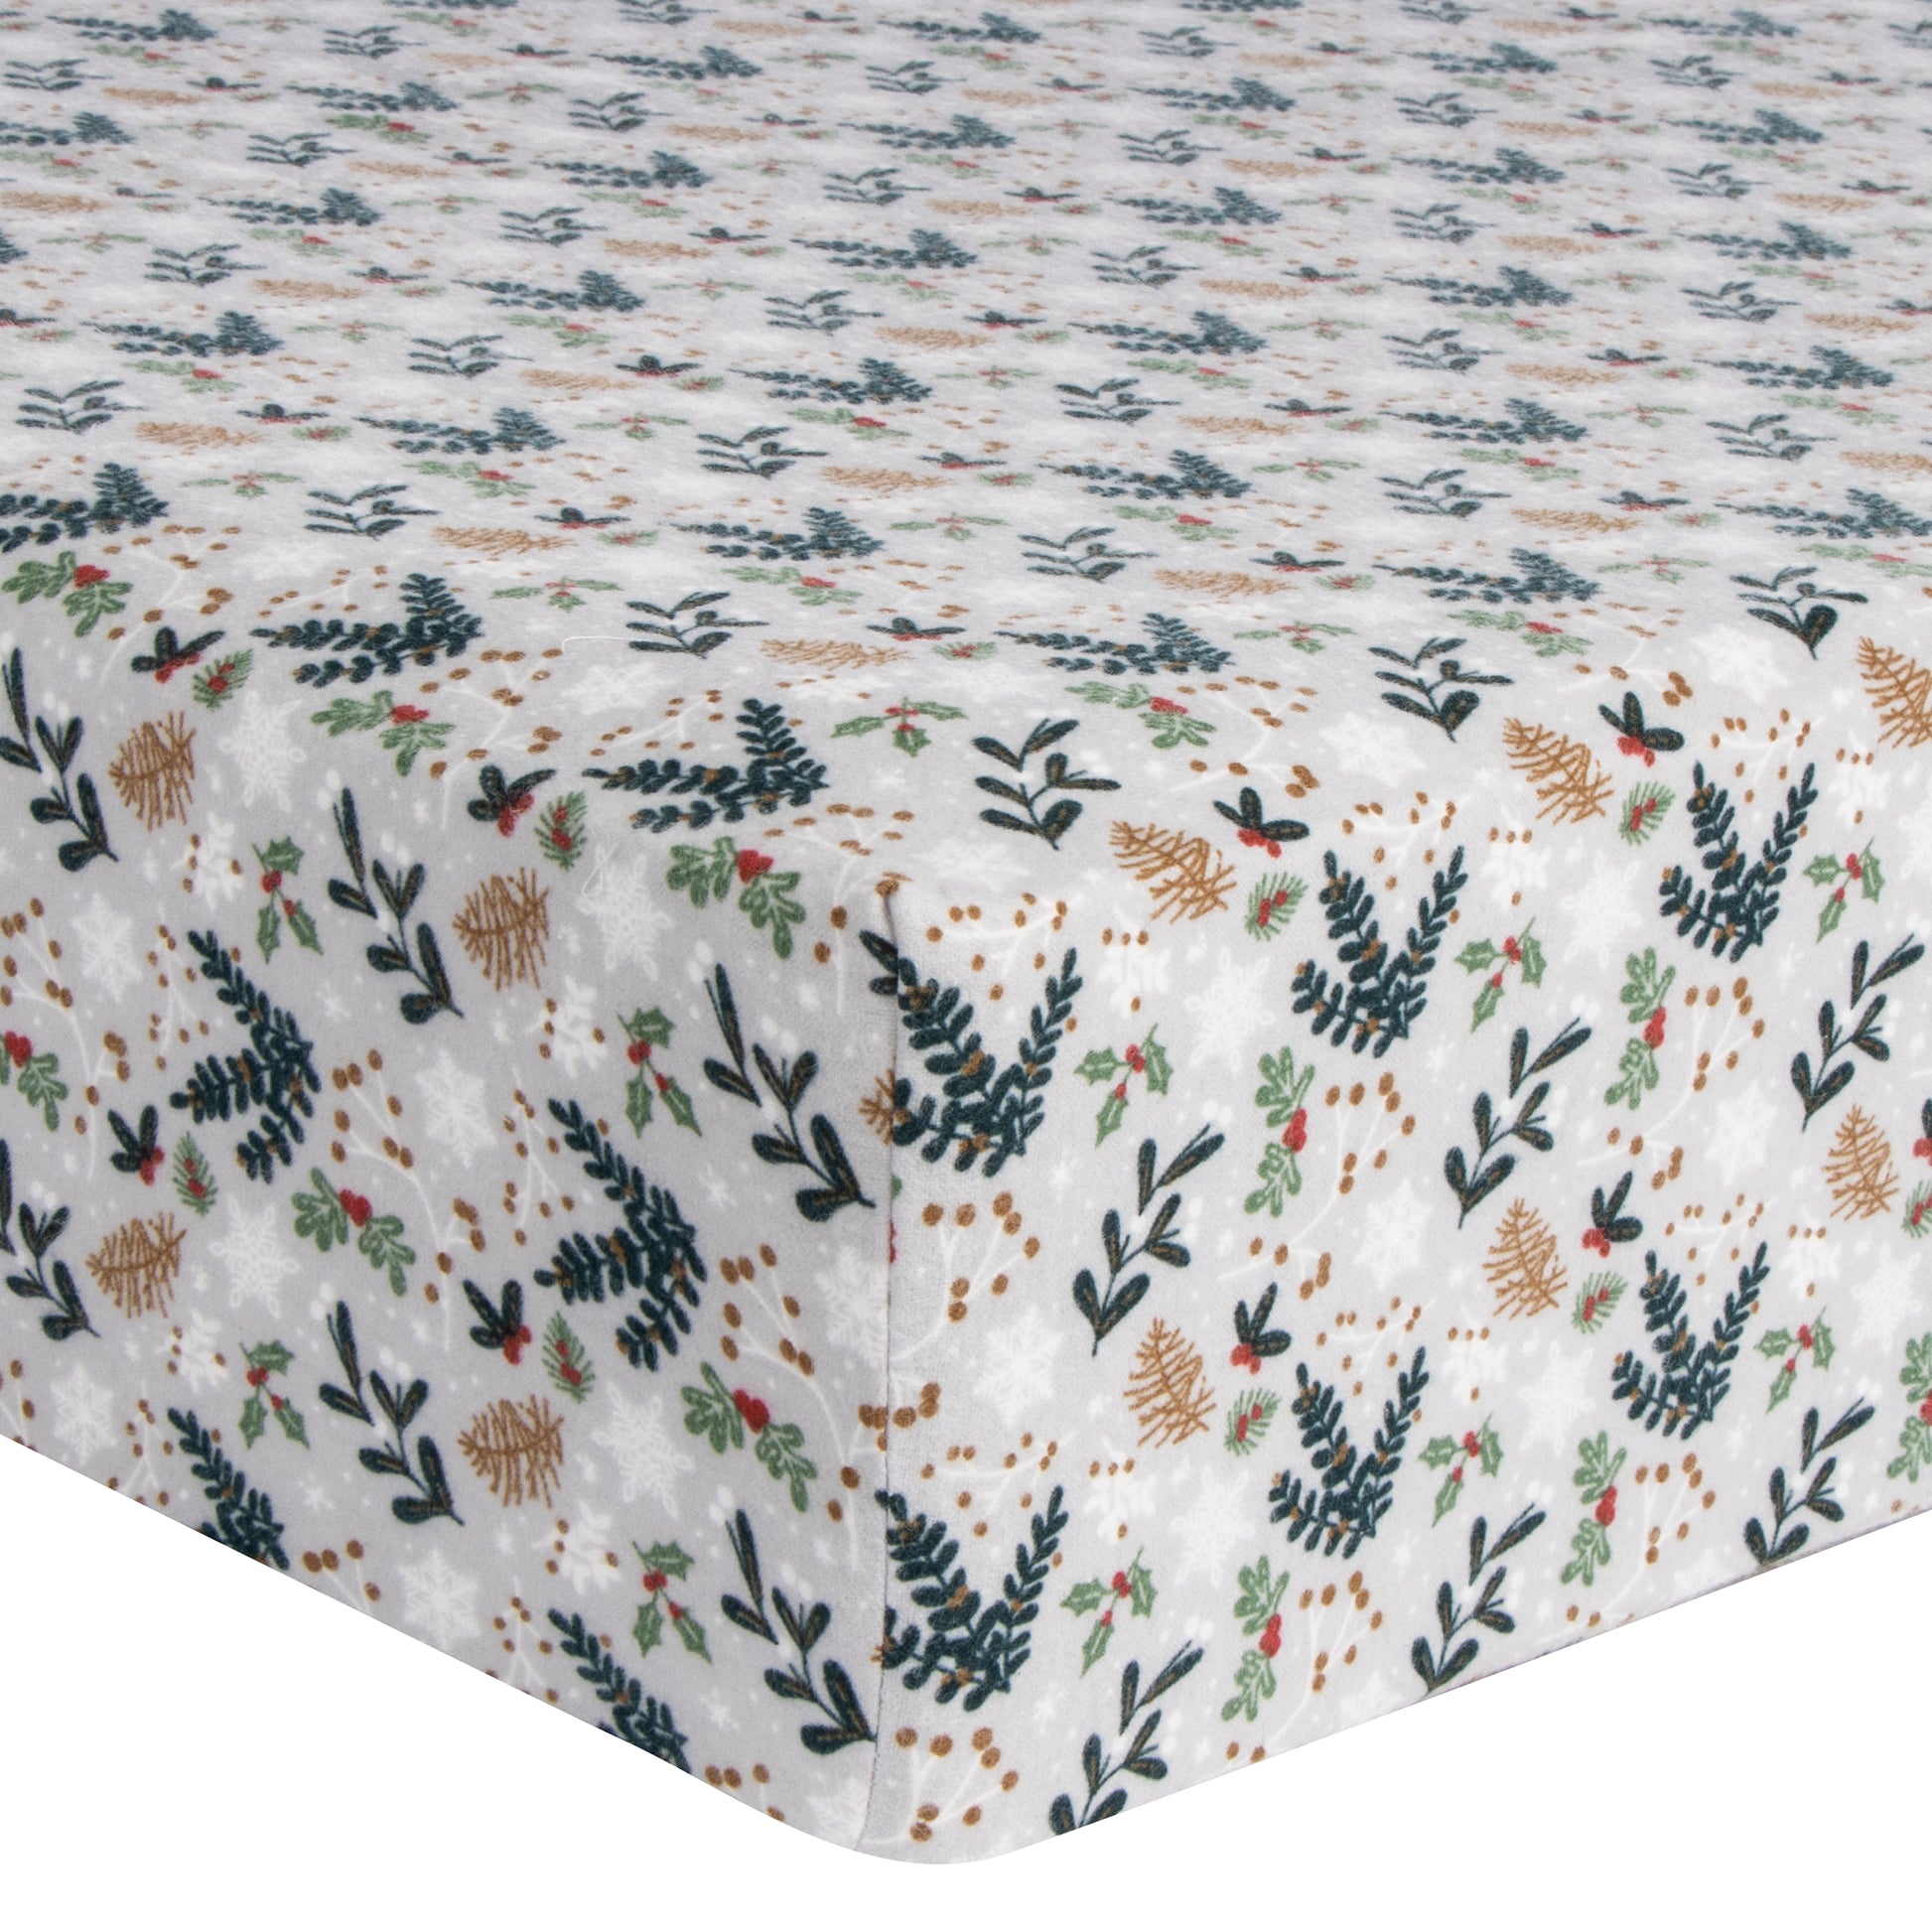 Mistletoe Deluxe Flannel Fitted Crib Sheet - Corner View